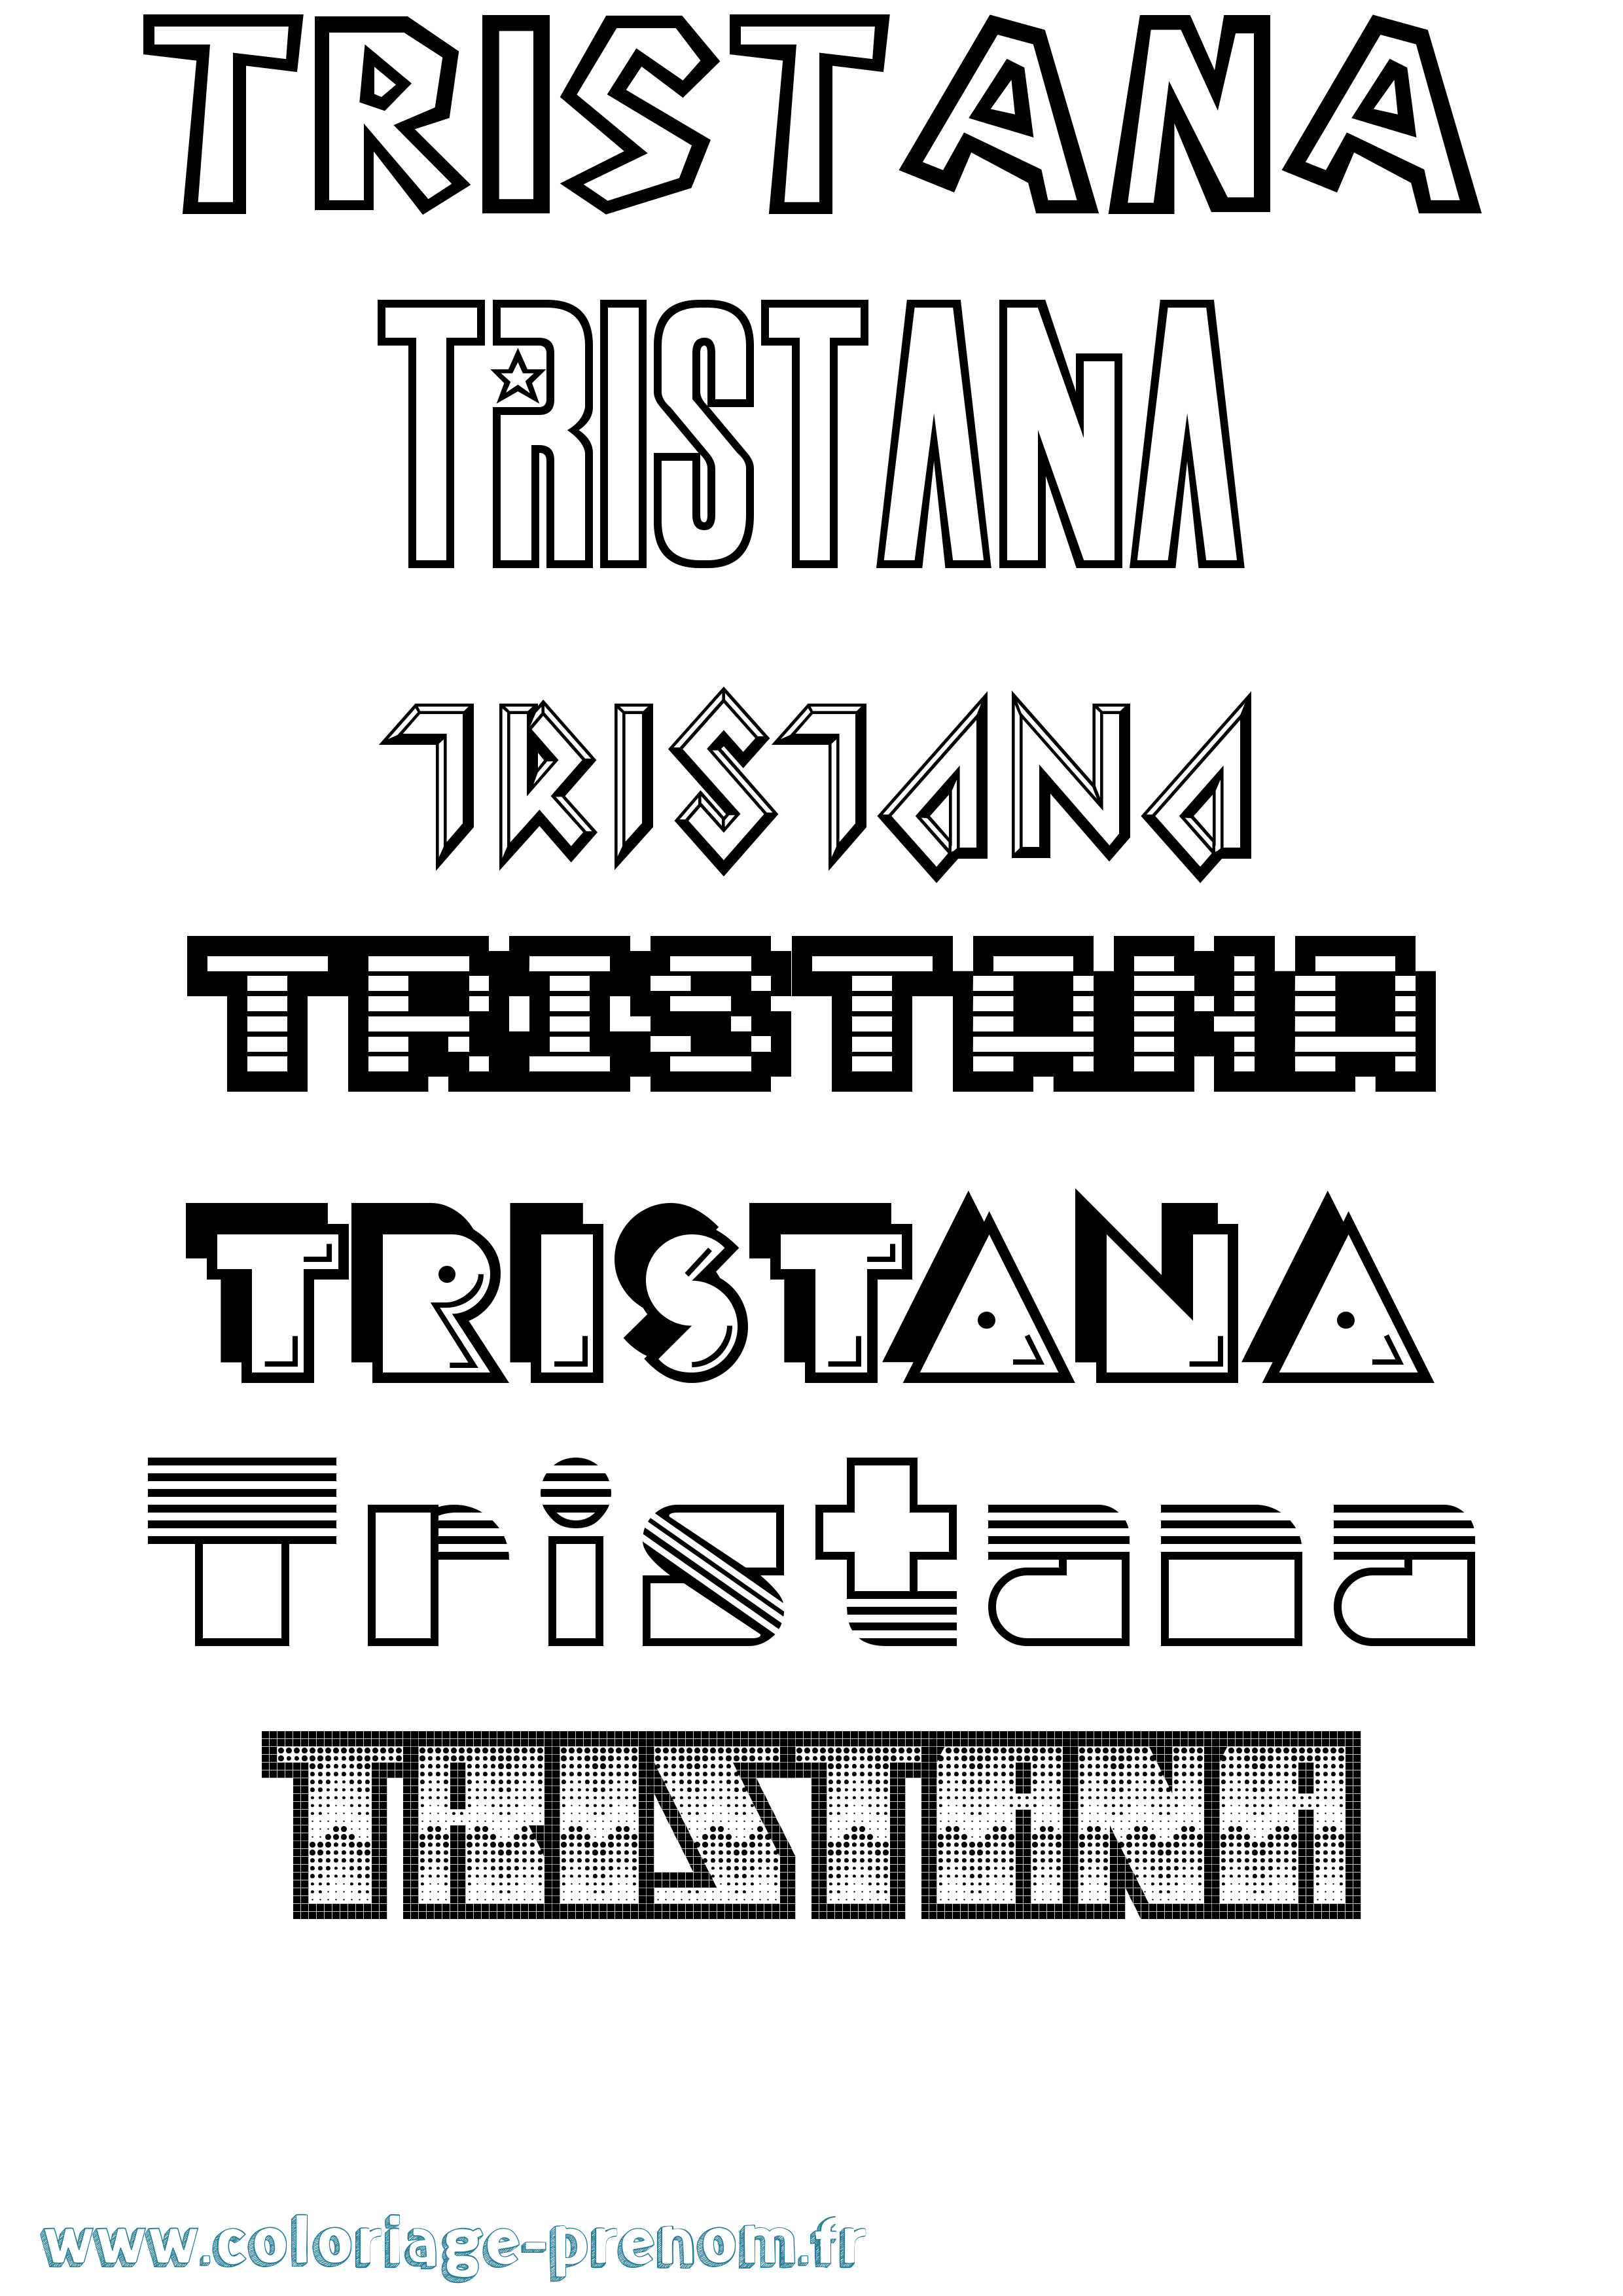 Coloriage prénom Tristana Jeux Vidéos